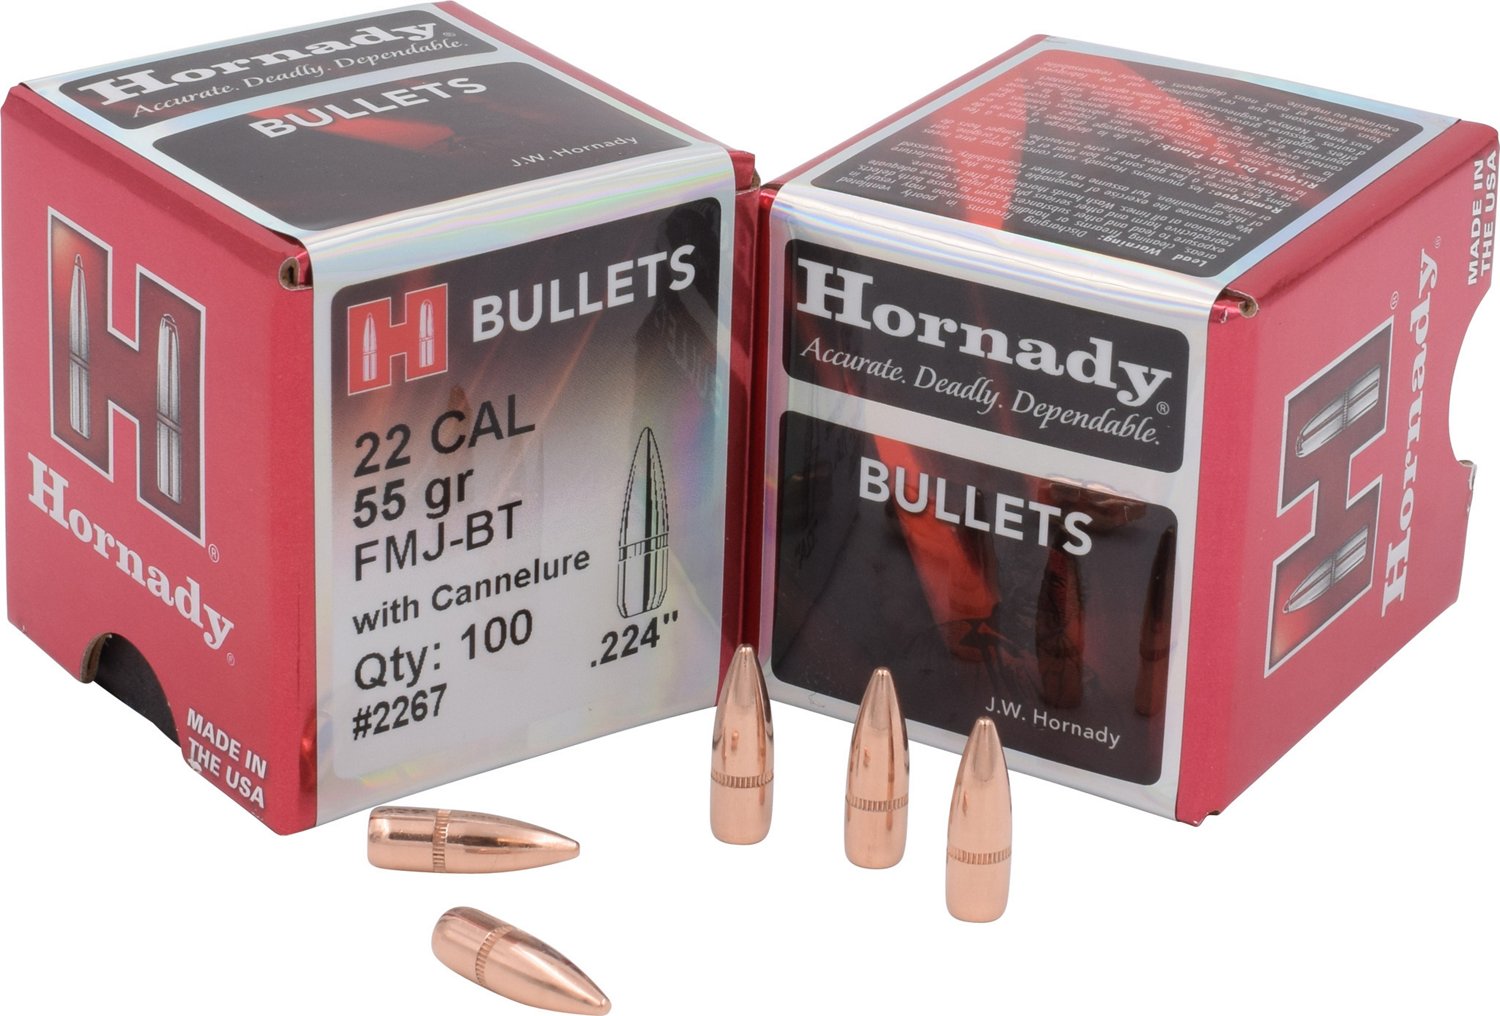 full metal jacket rifle ammunition